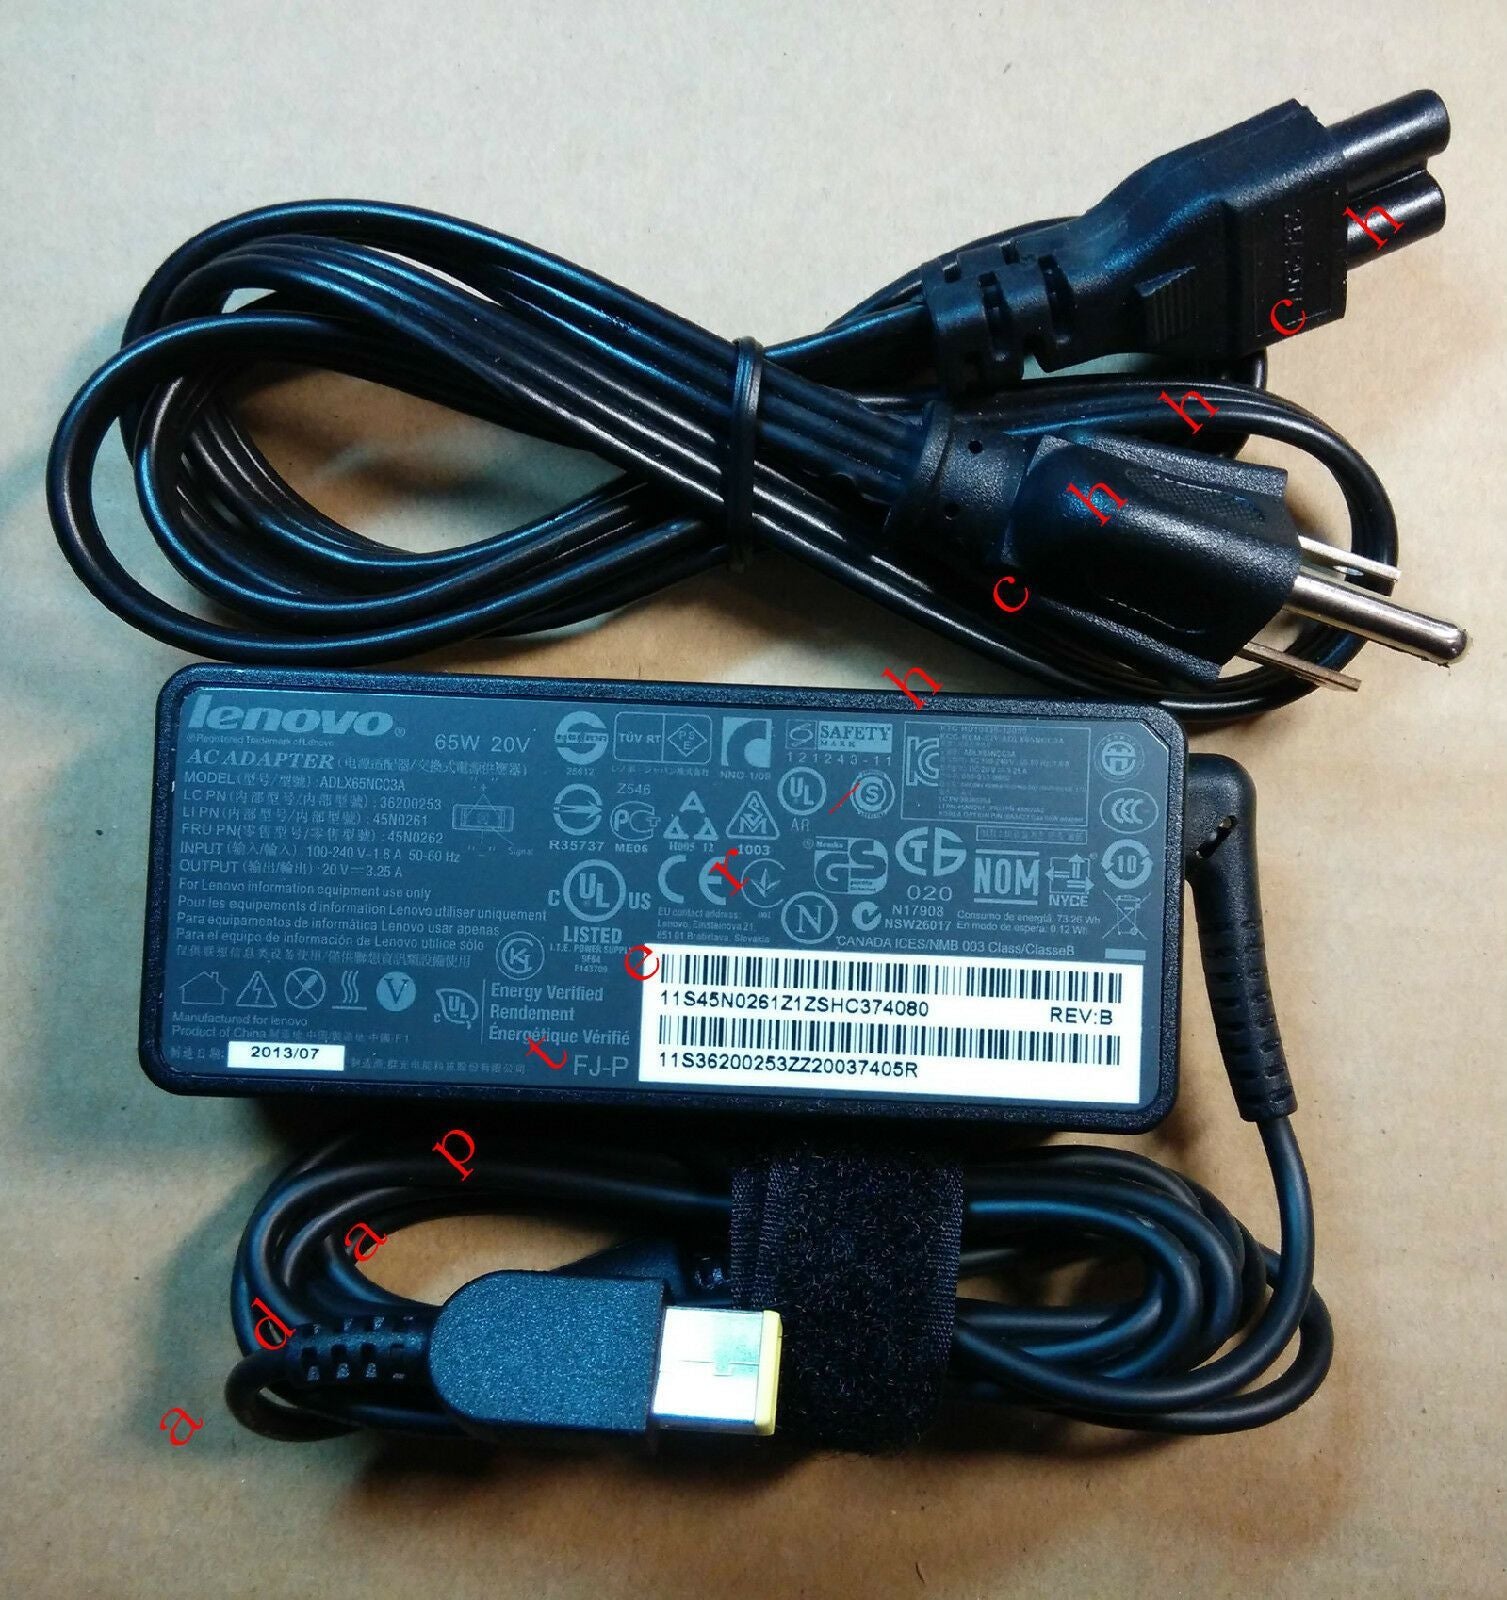 Genuine OEM Lenovo 65W 20V AC Power Adapter for ThinkPad S3-S440 Laptop Series